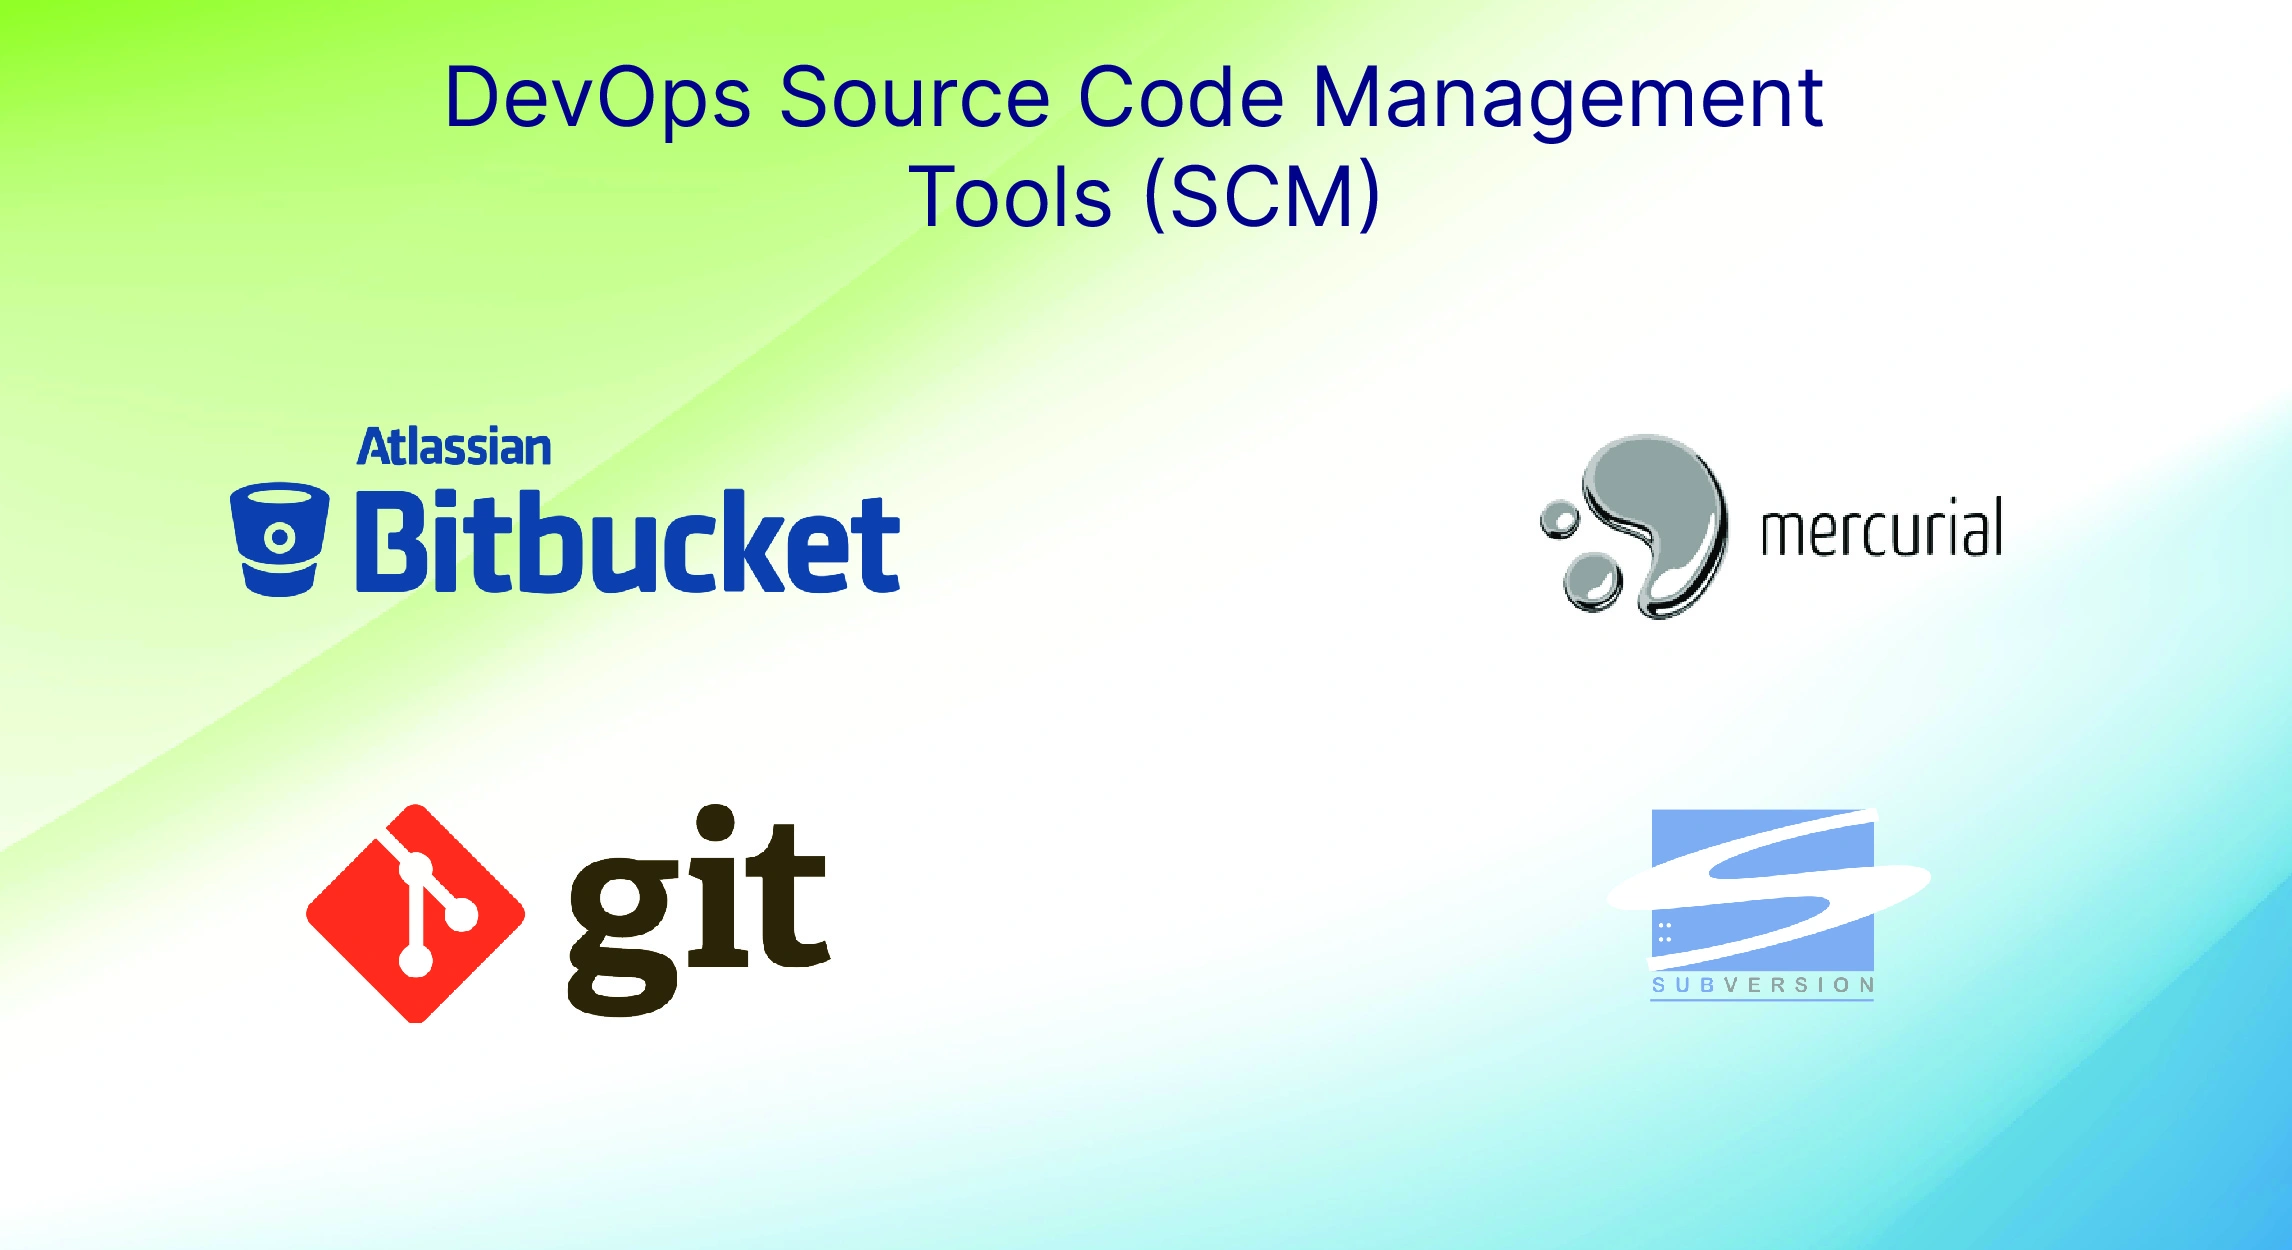 DevOps Source Code Management Tools